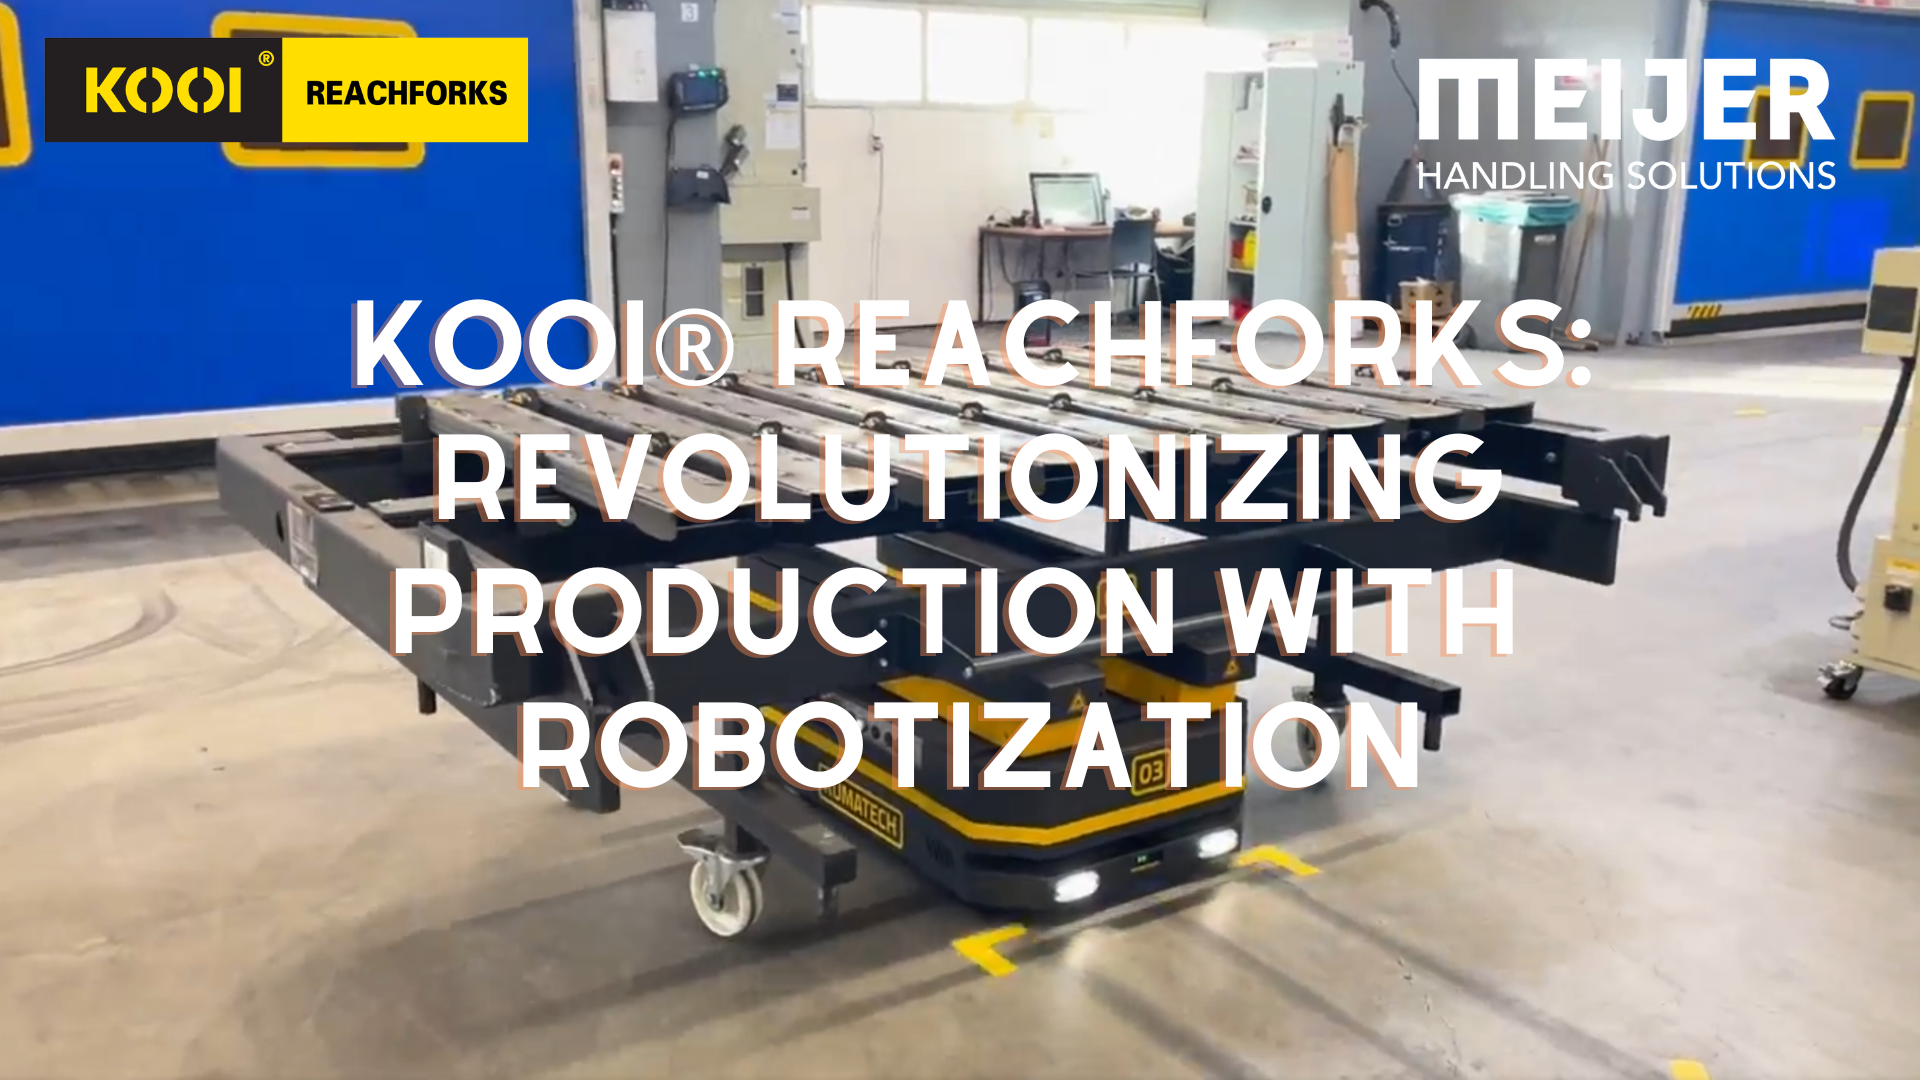 kooi-reachforks-robotization